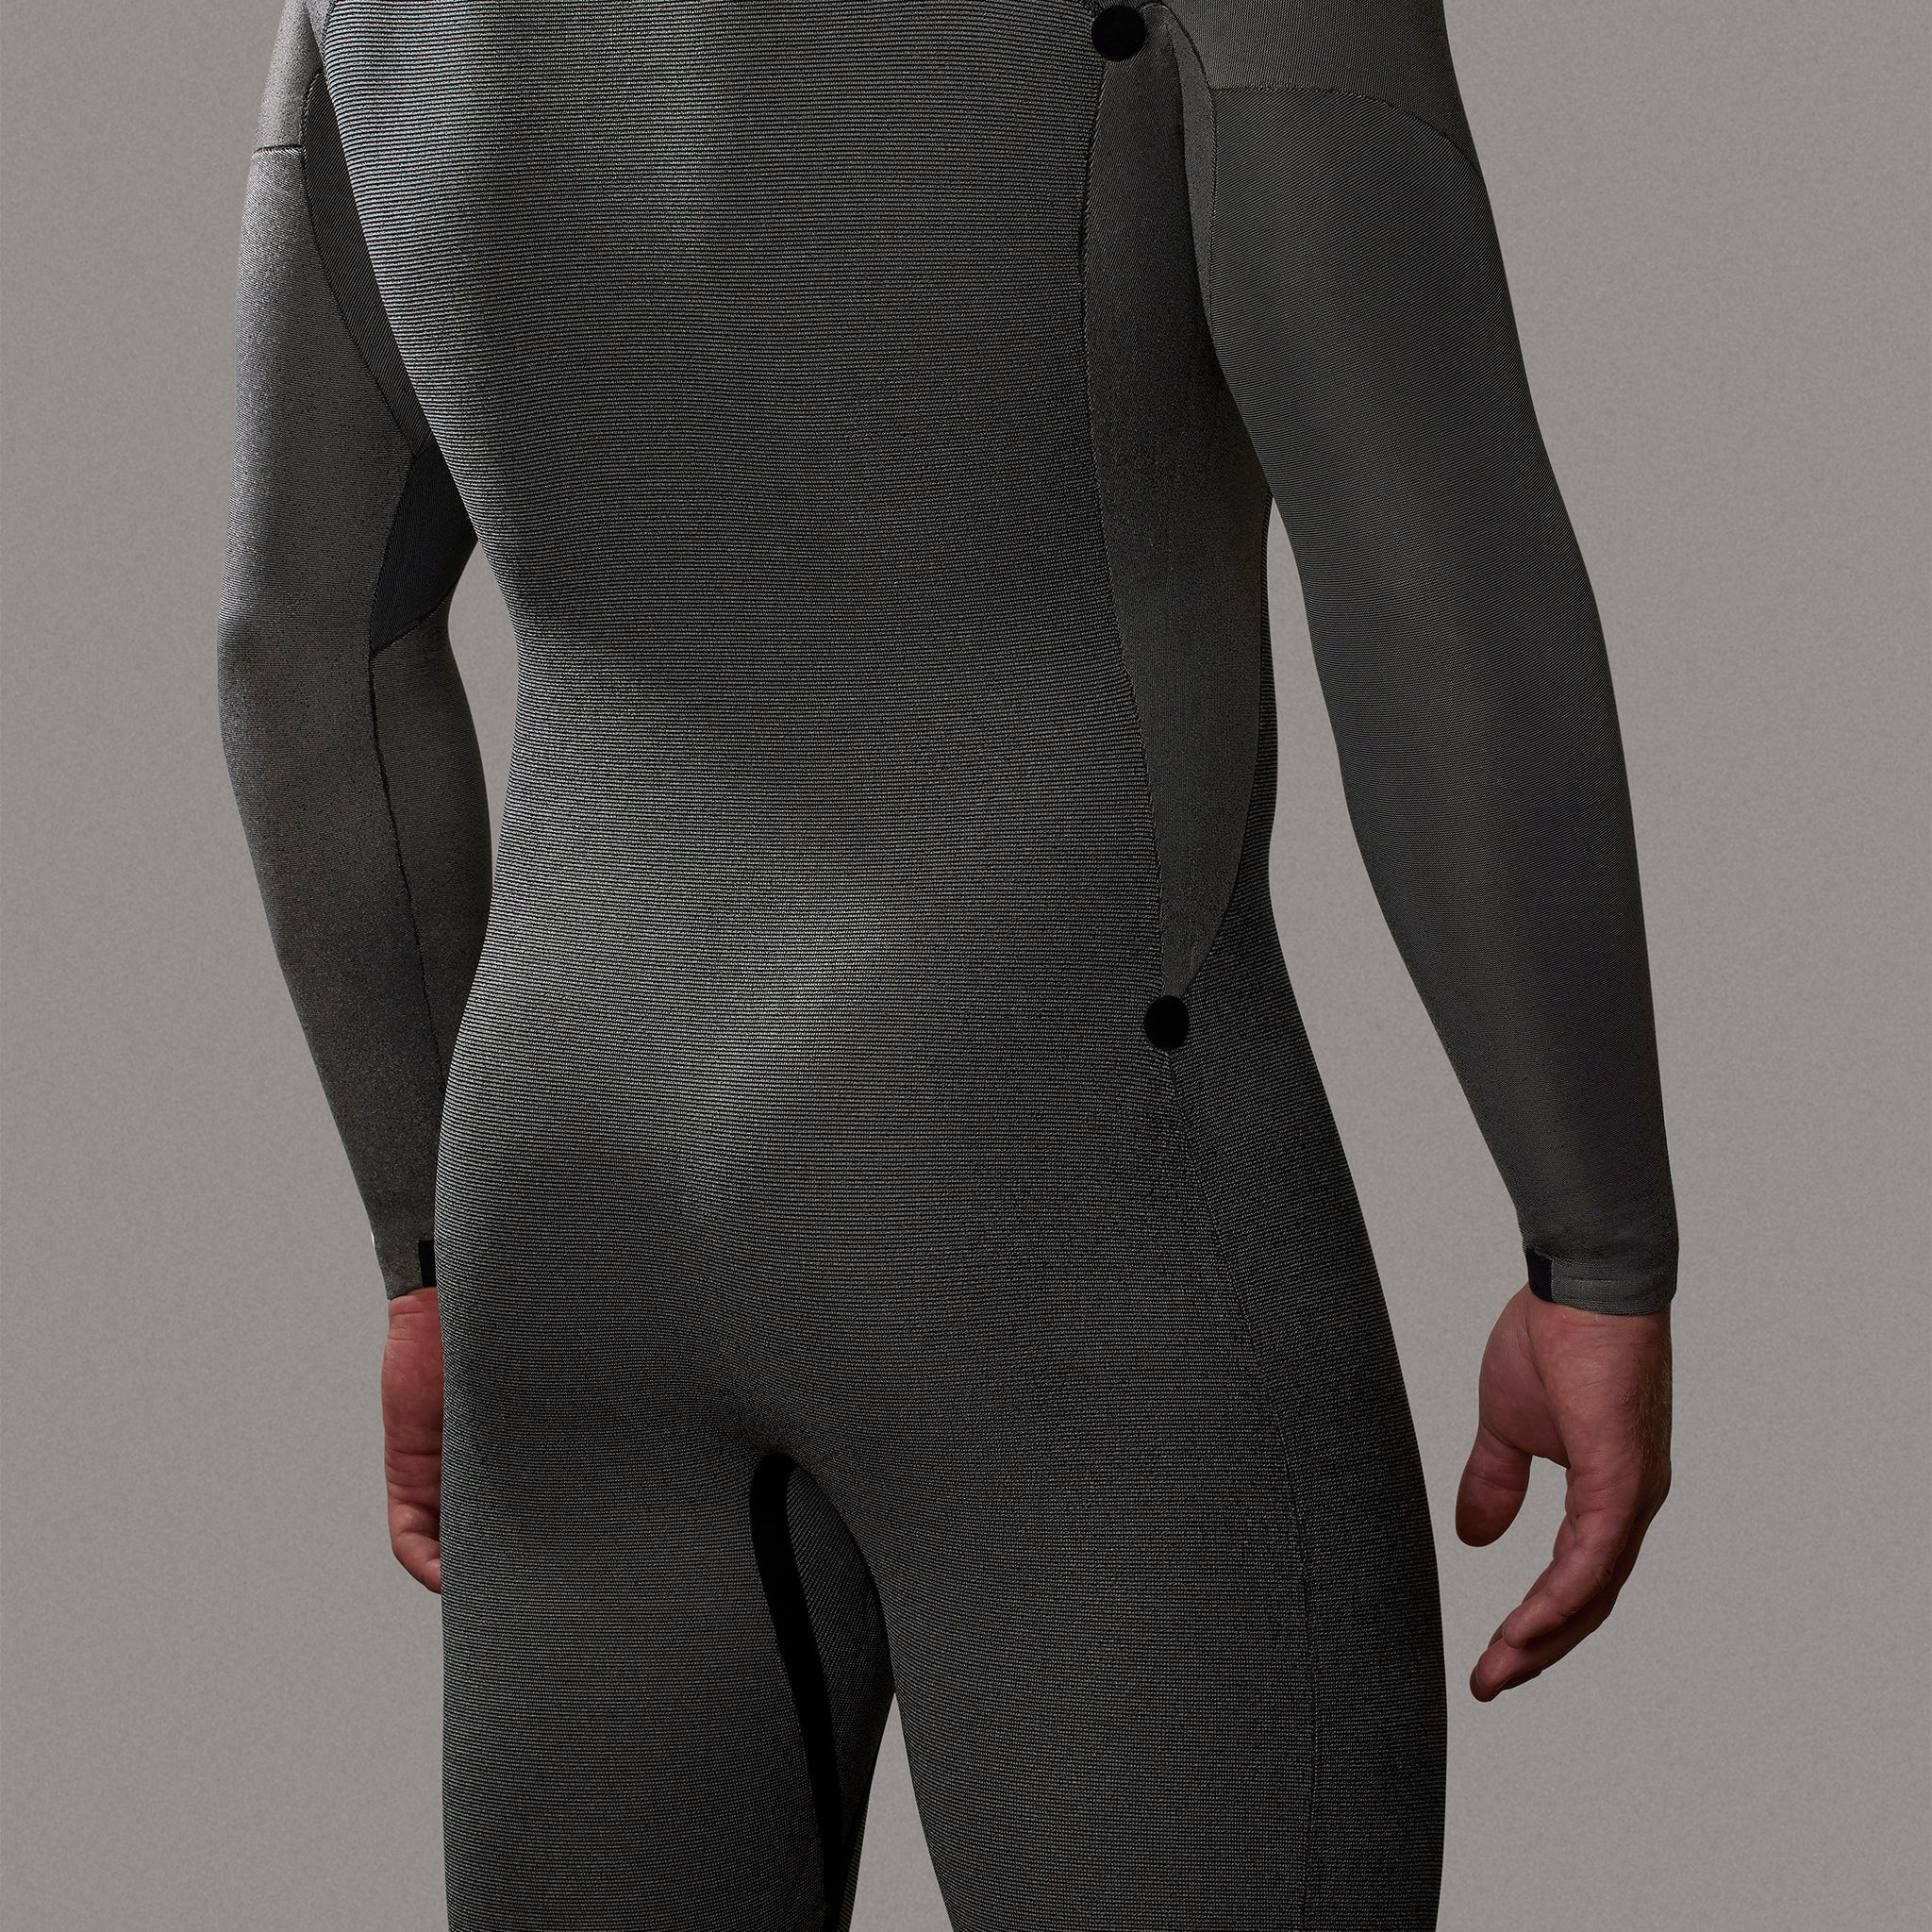 Men's Comp 4/3mm Full Wetsuit – Xcel Wetsuits